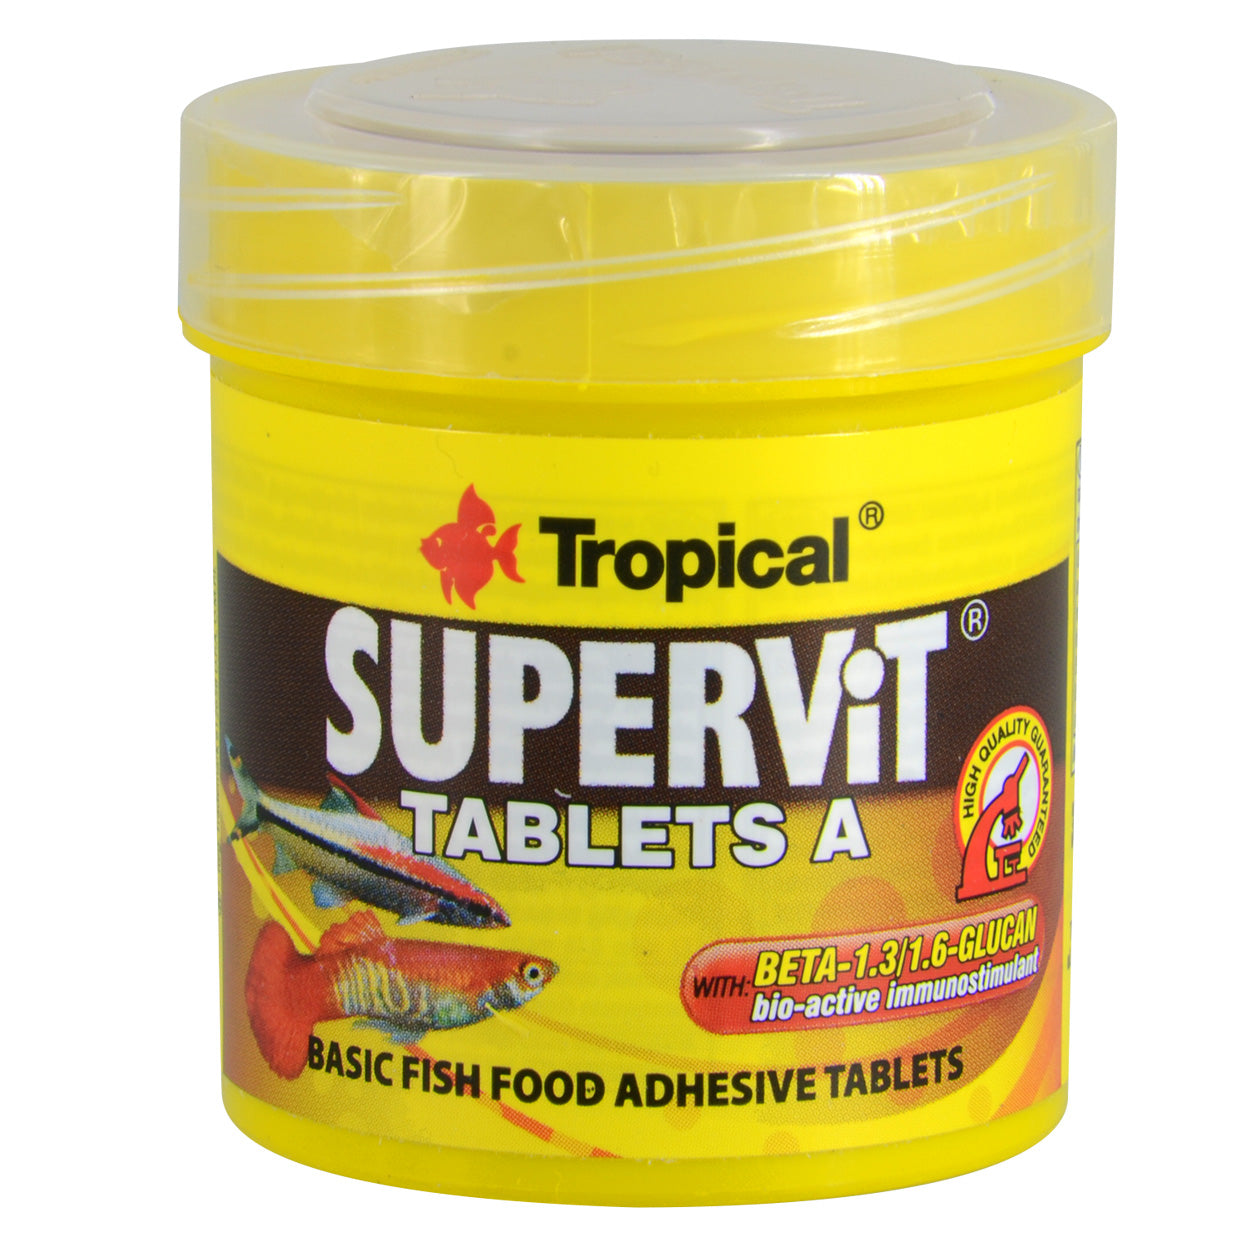 Tropical Supervit Tablets A - 36 g